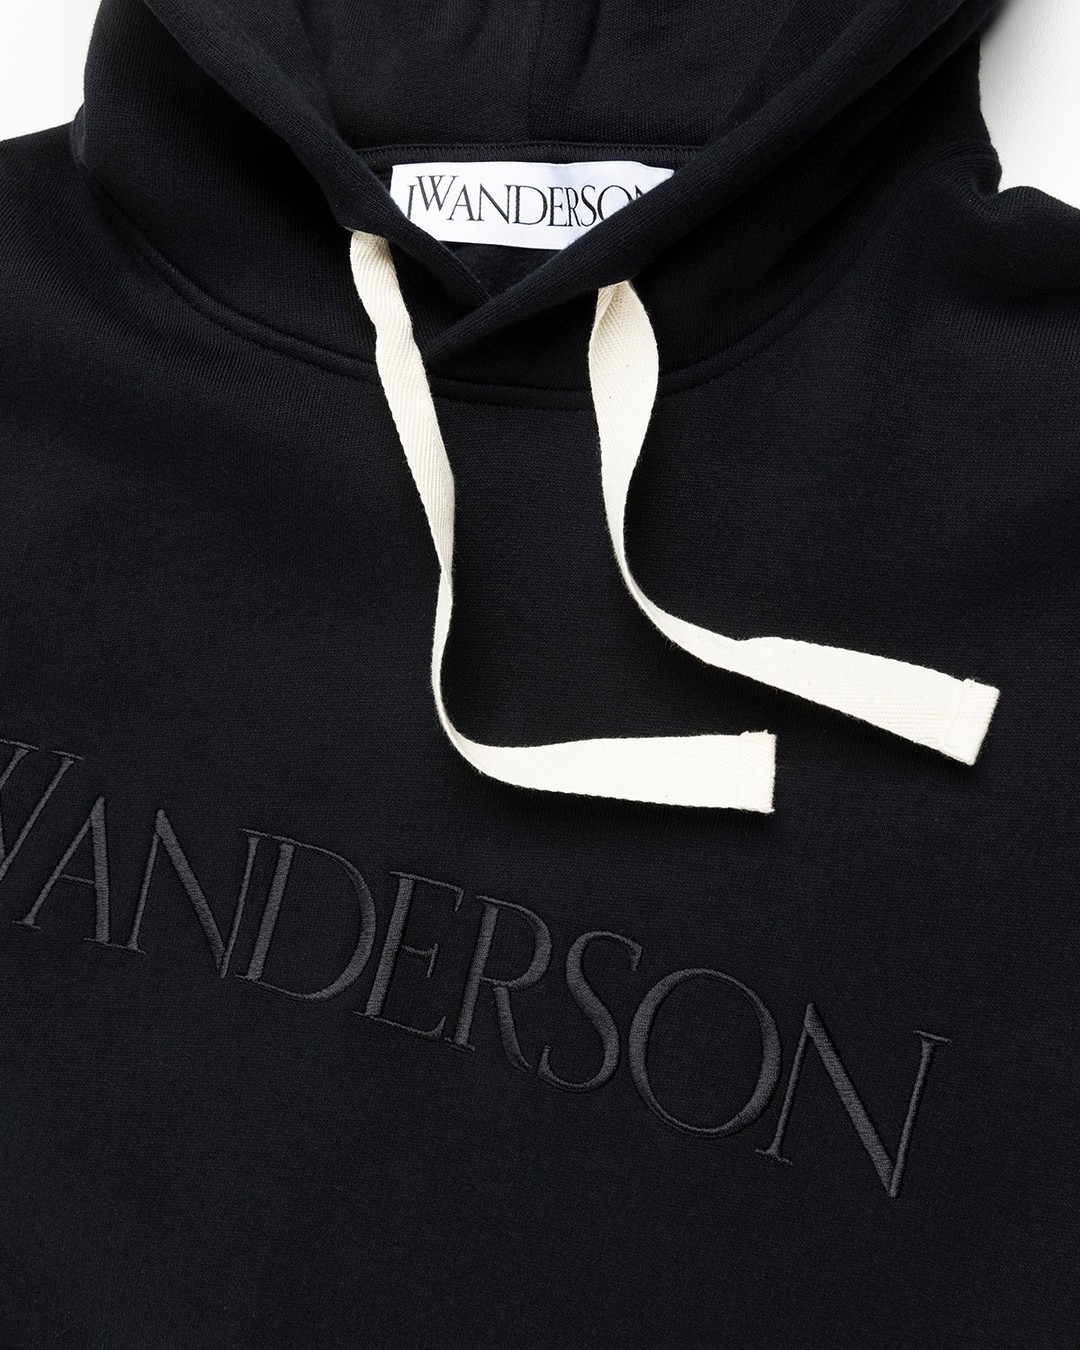 J.W. Anderson – Classic Logo Hoodie Black - Sweats - Black - Image 3